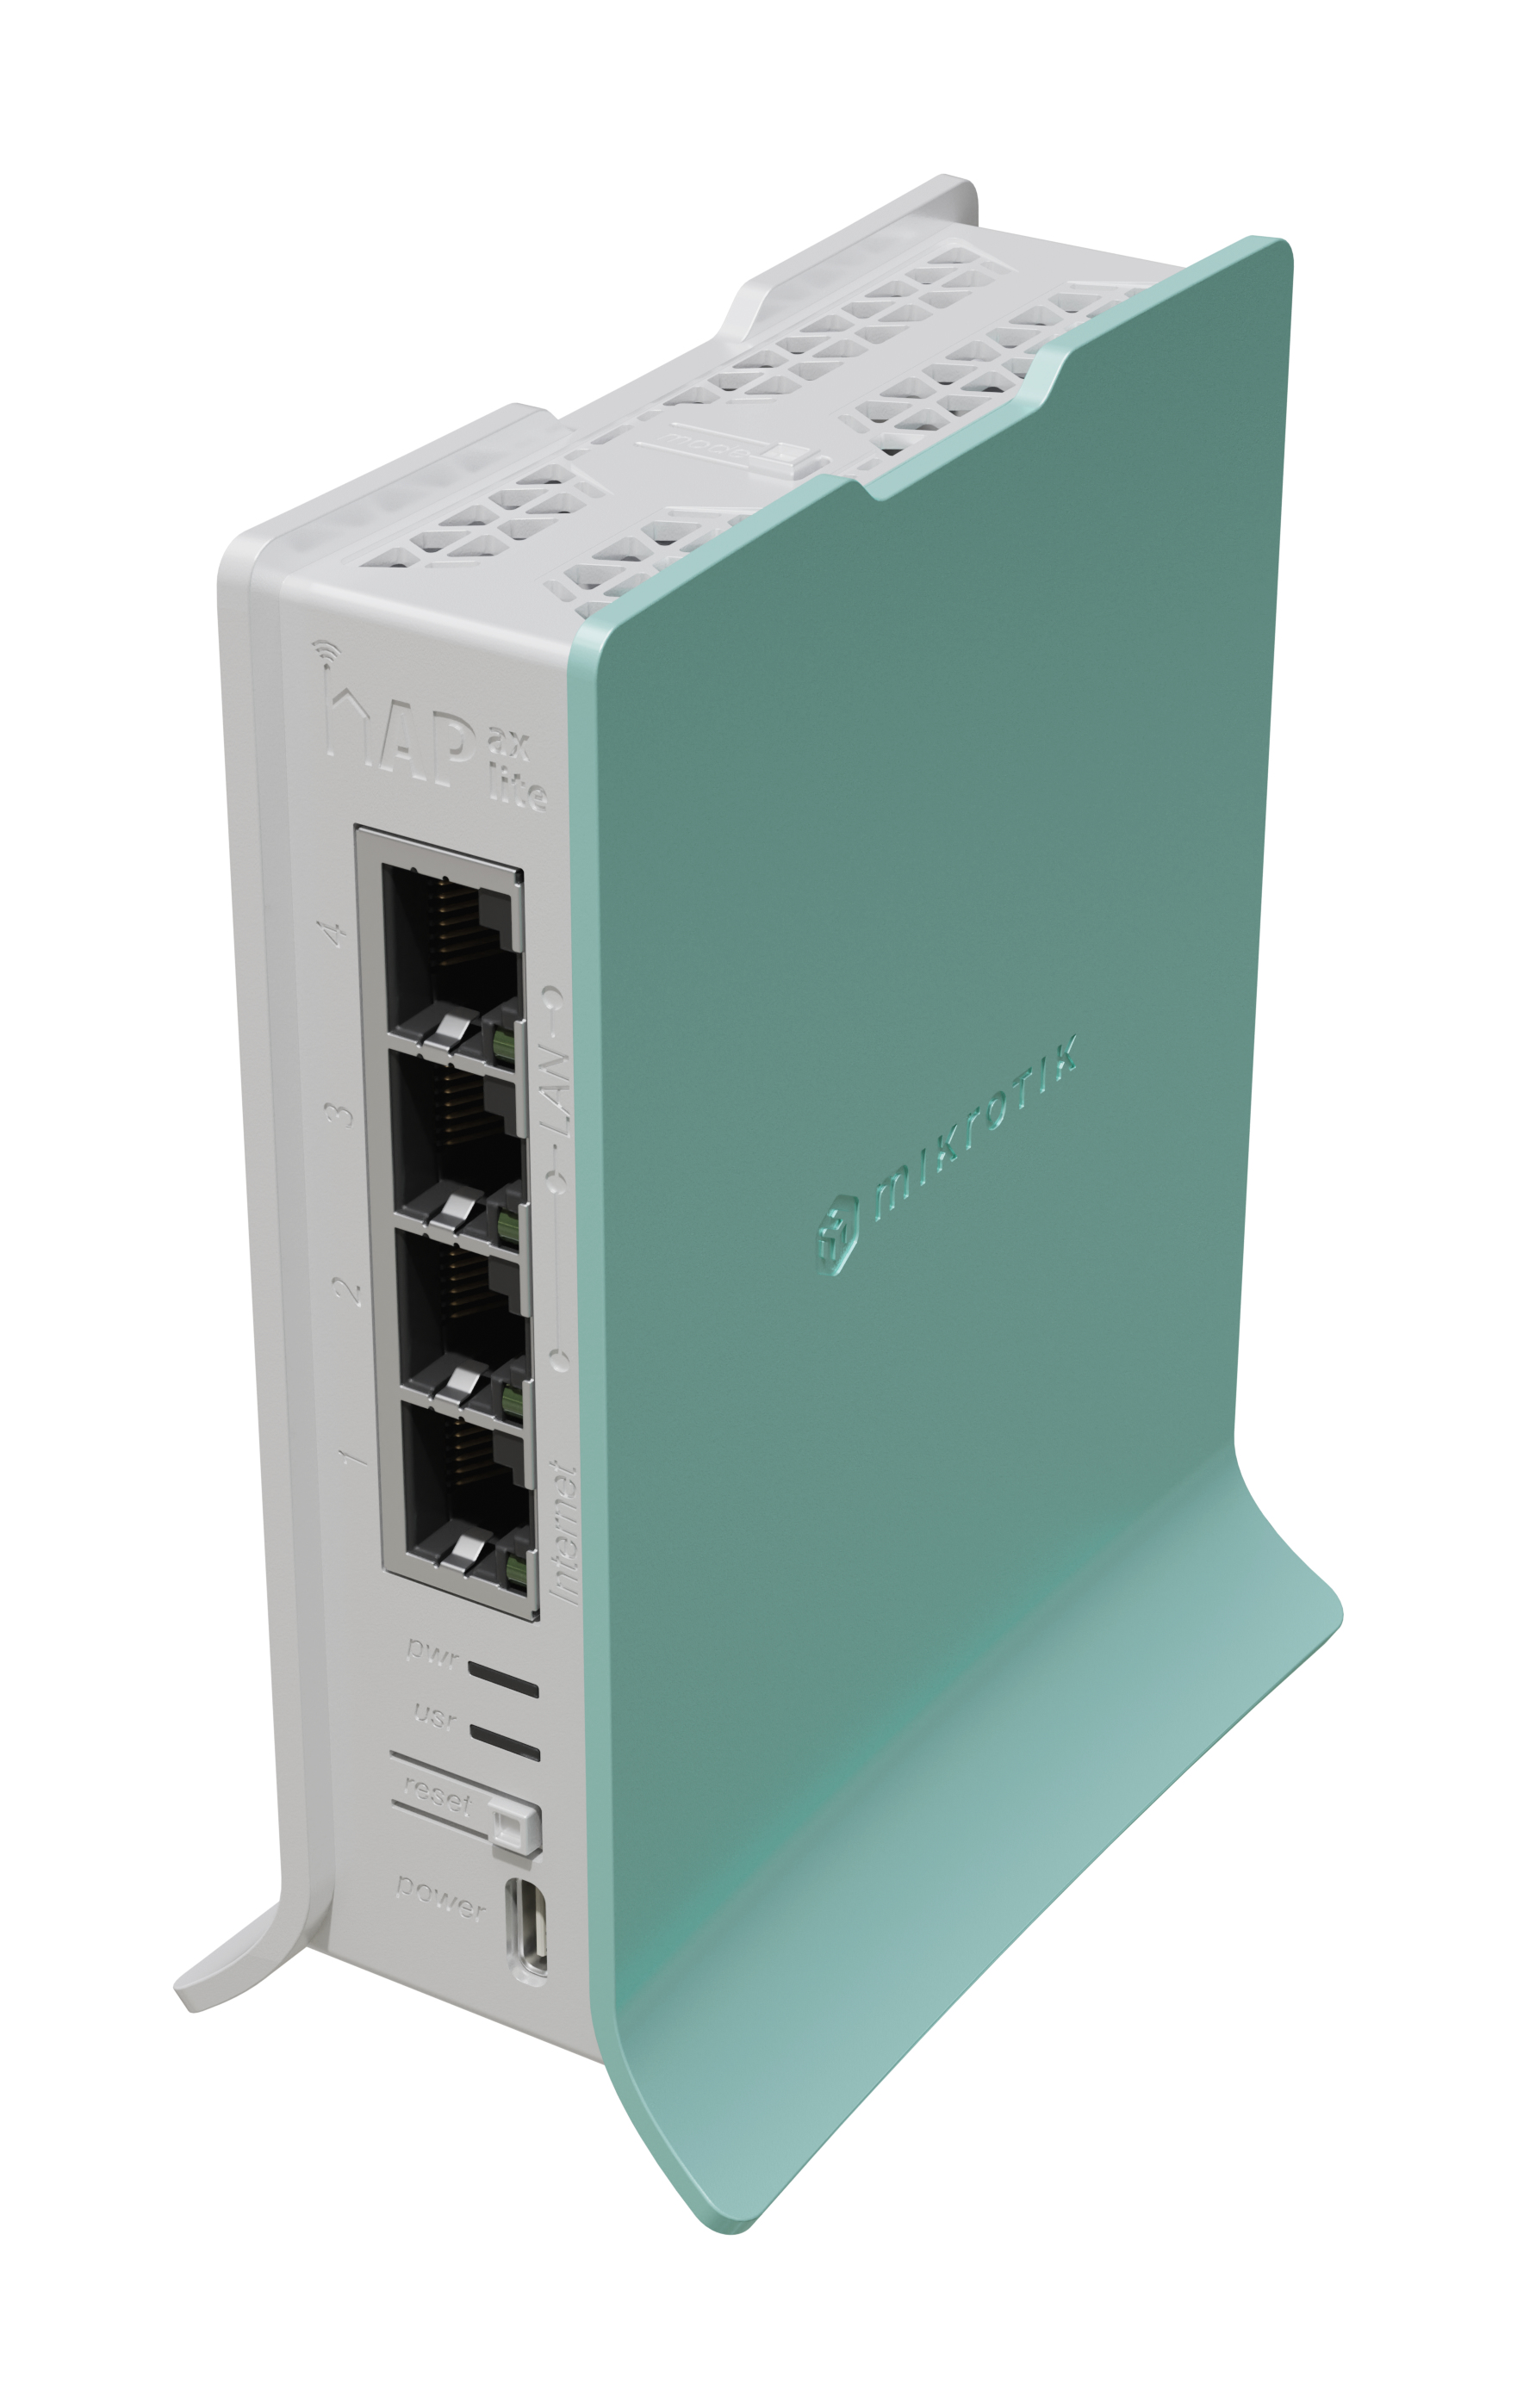 Mikrotik hAP trådlös router Gigabit Ethernet Singel-band (2,4 GHz) Grön, Vit